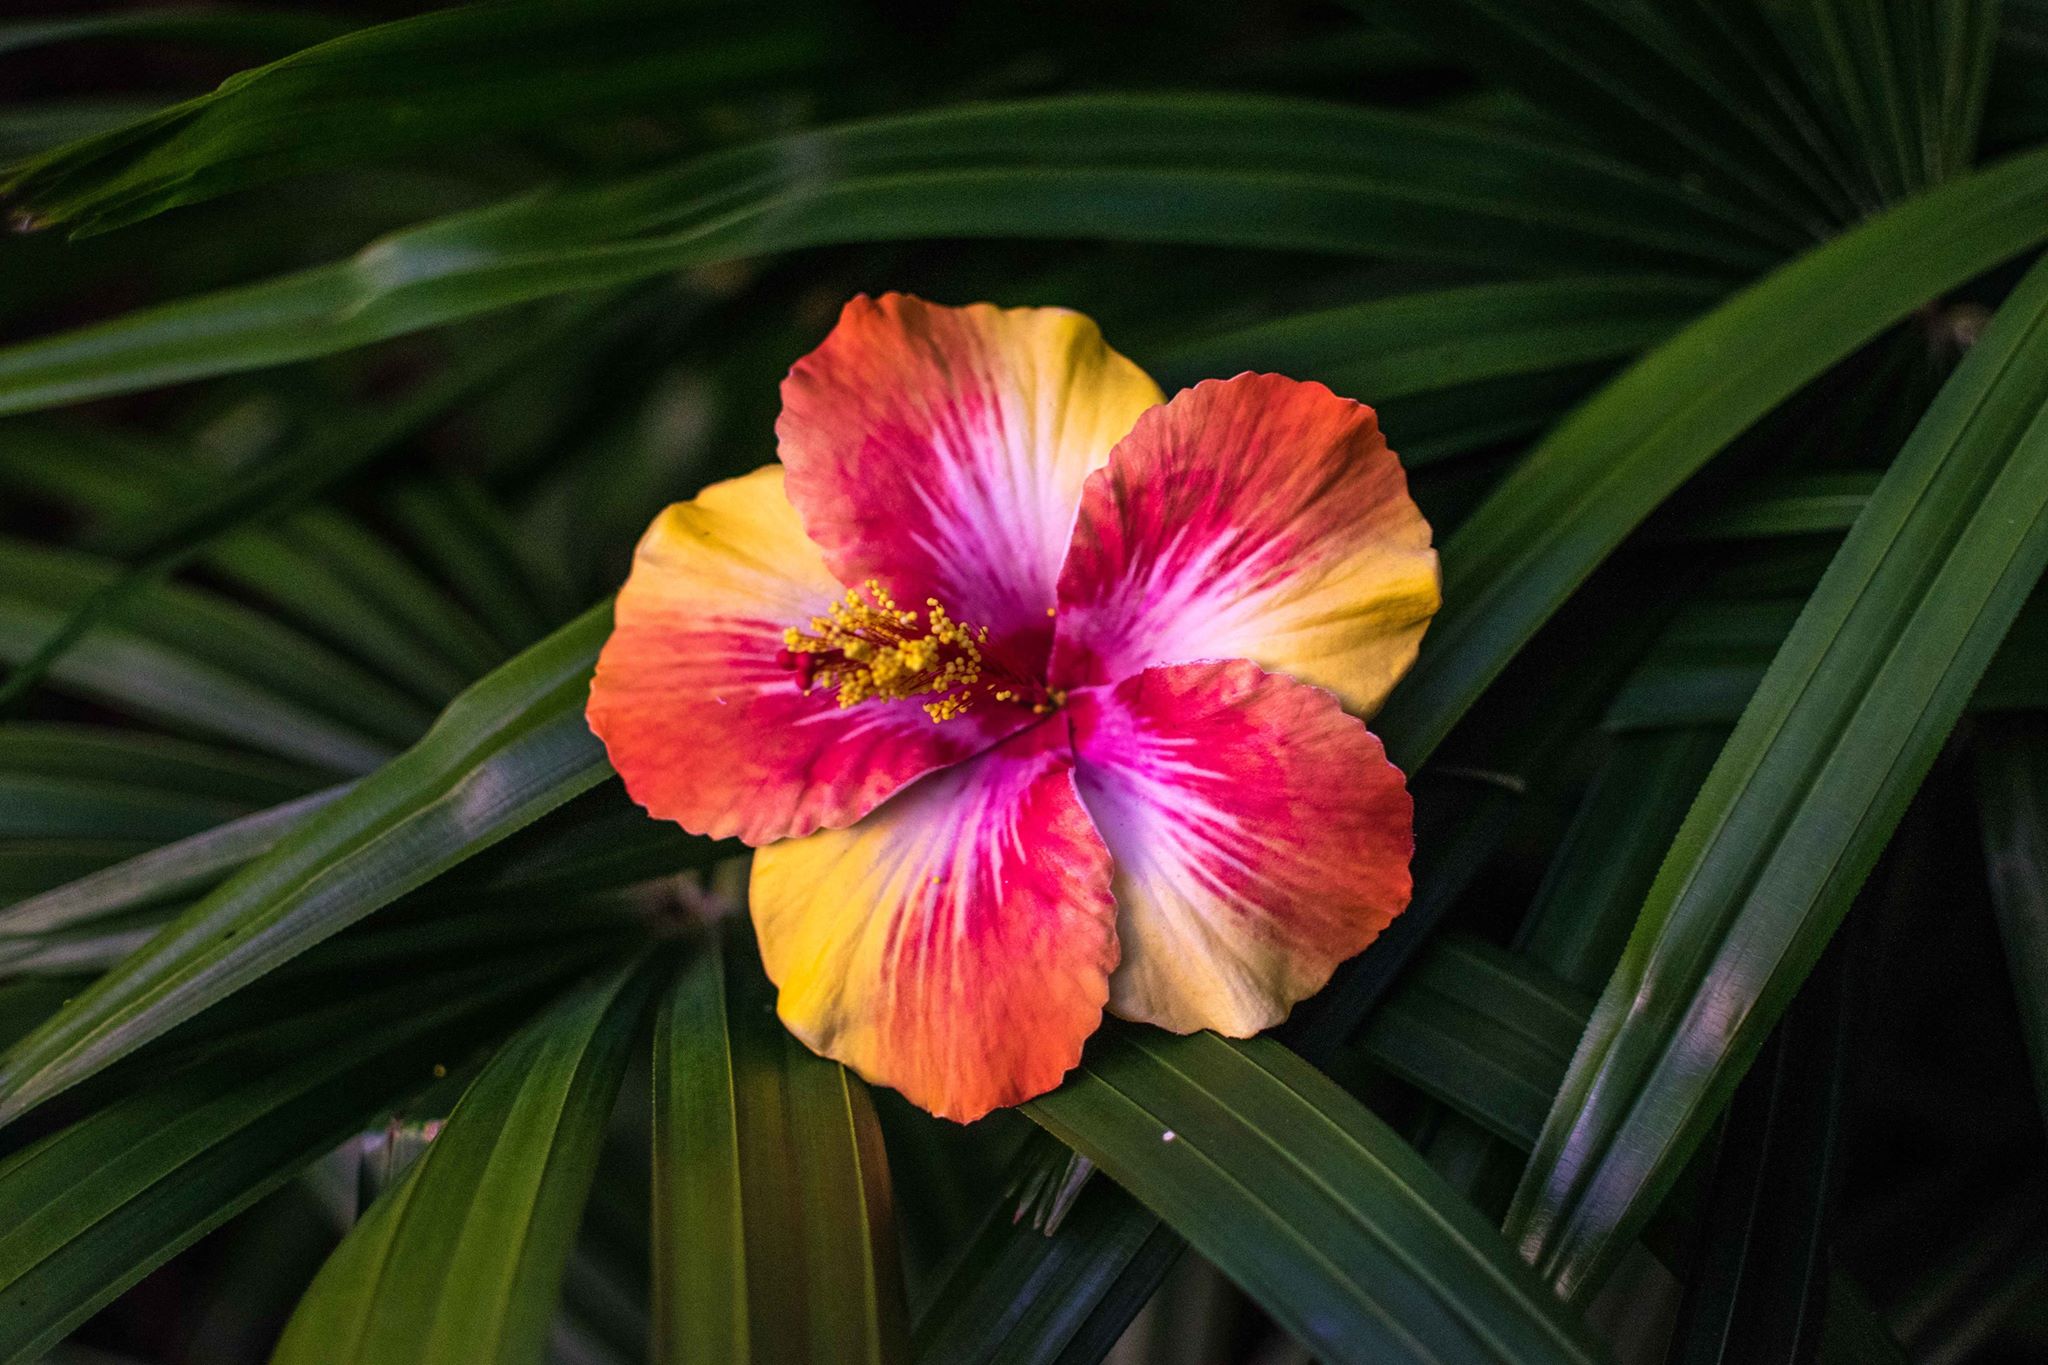 Single Hibiscus Flower